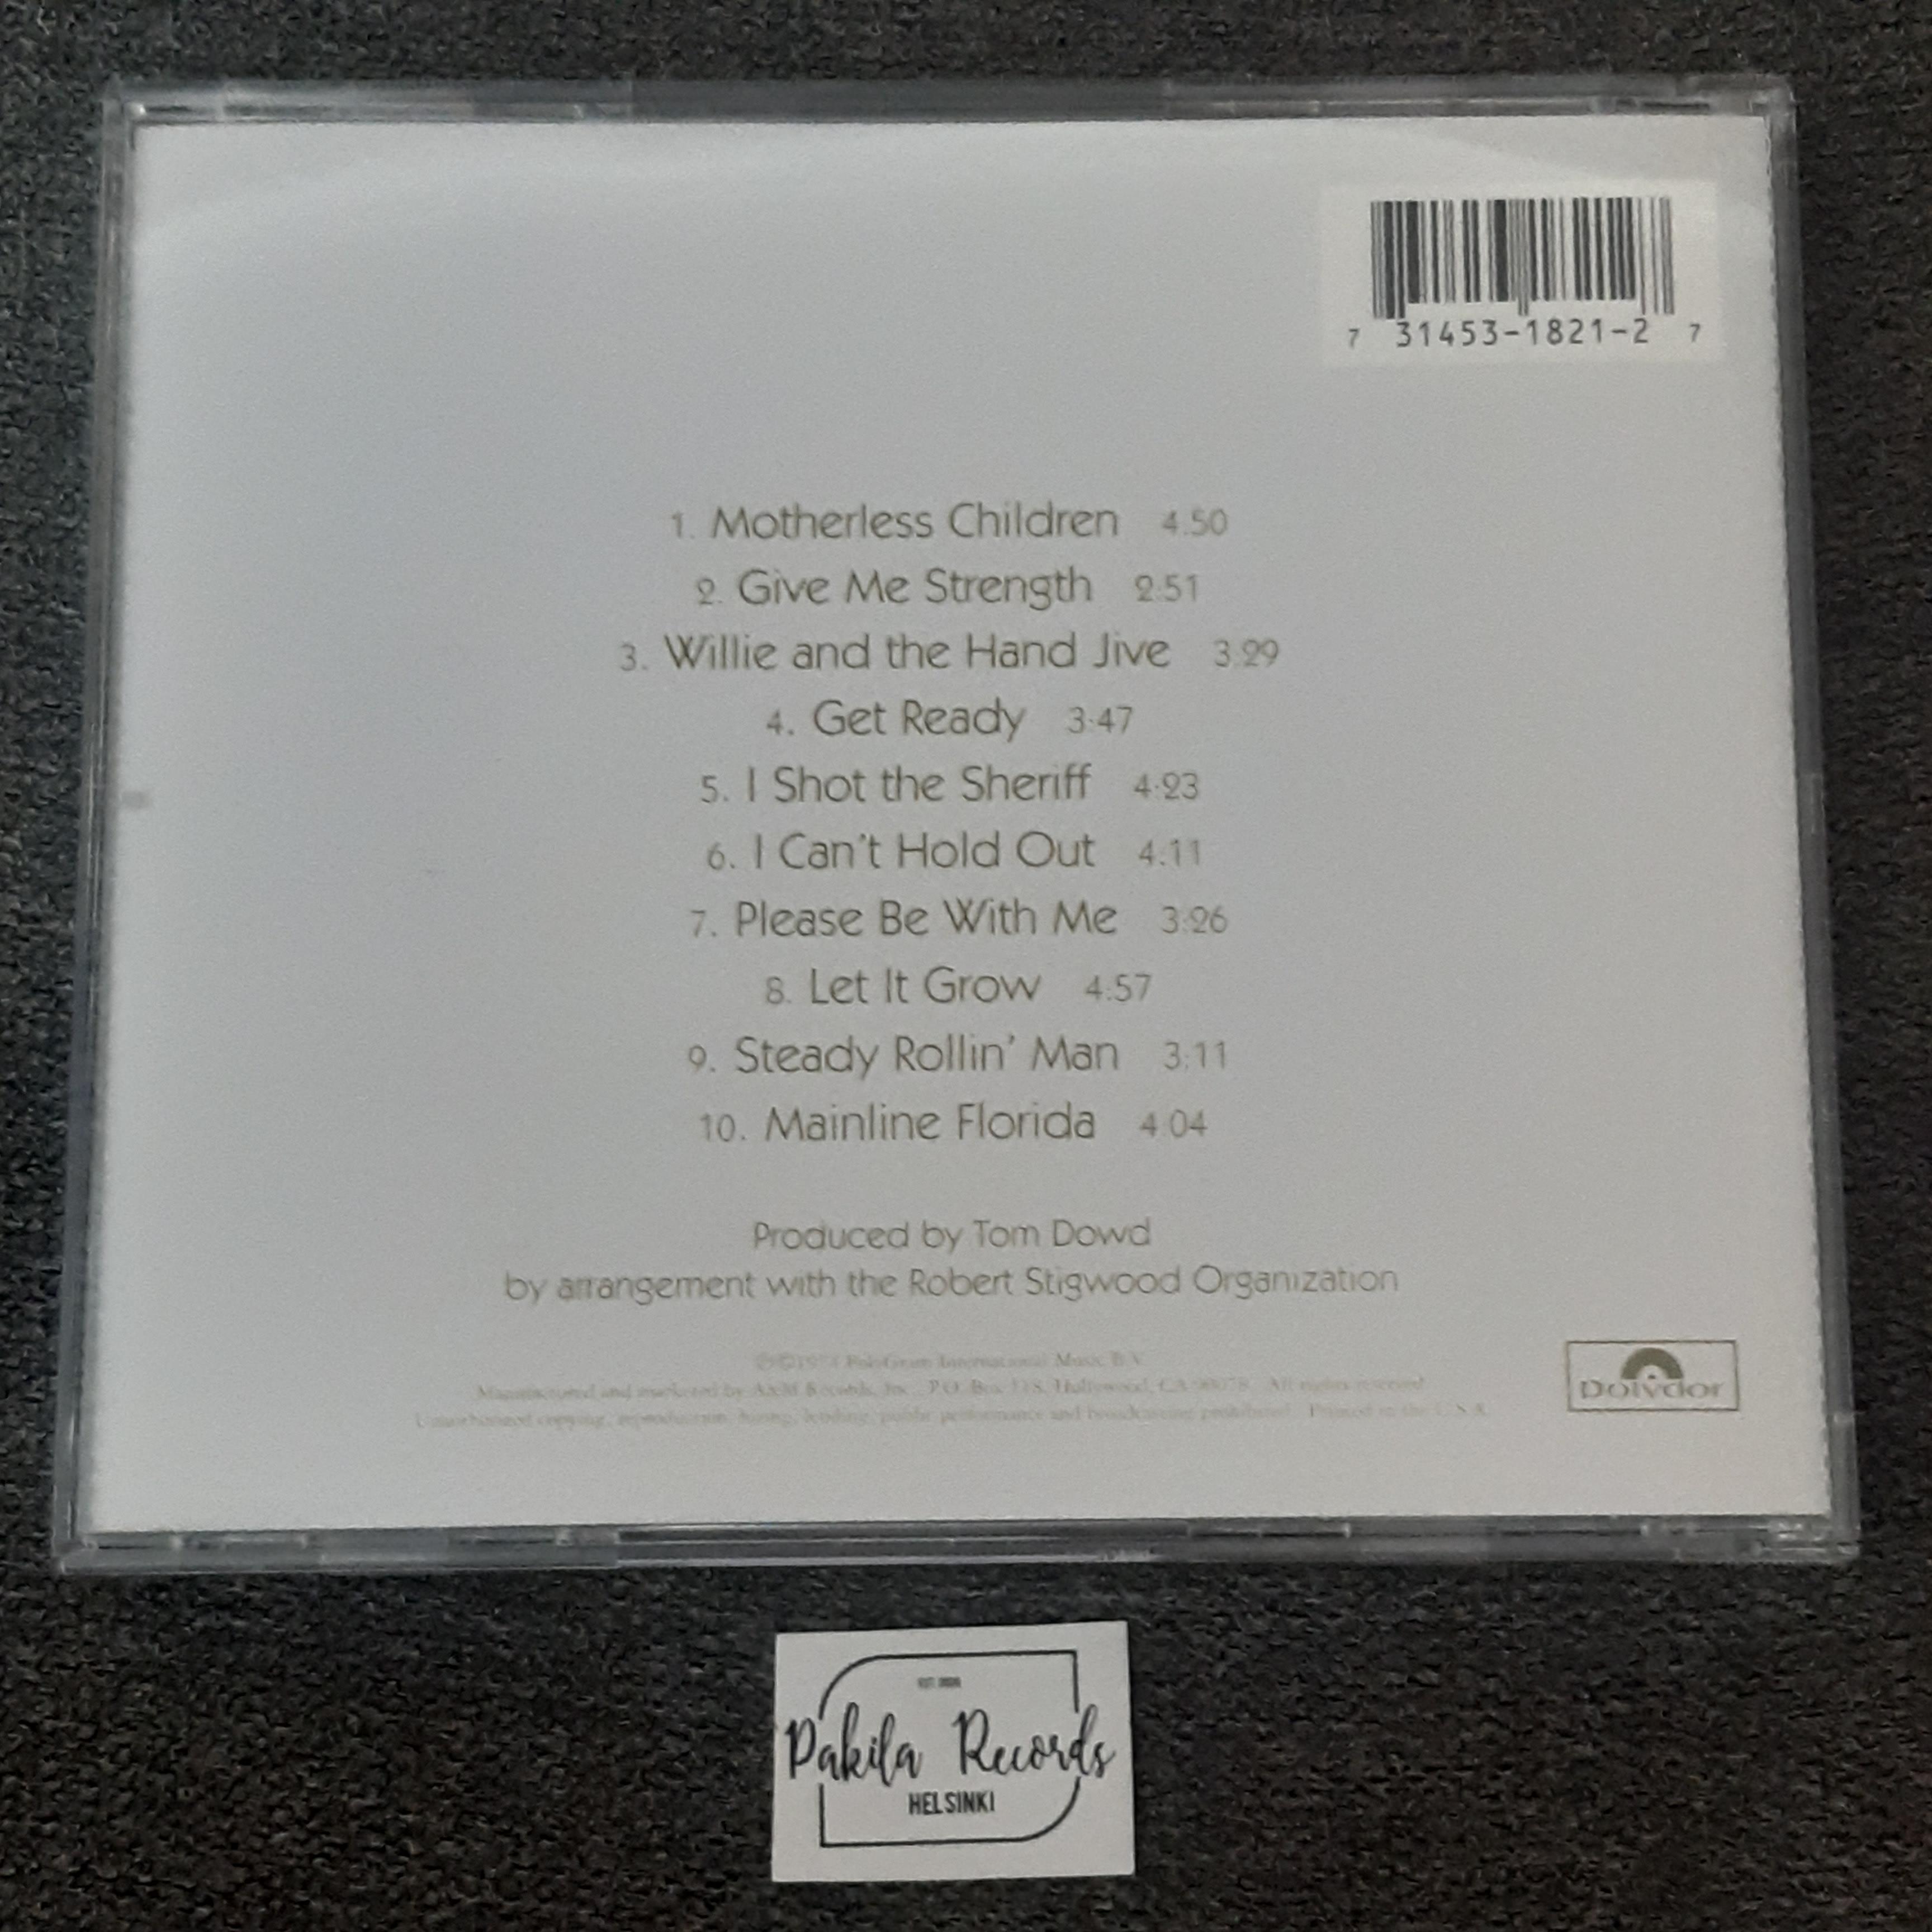 Eric Clapton - 461 Ocean Boulevard - CD (käytetty)